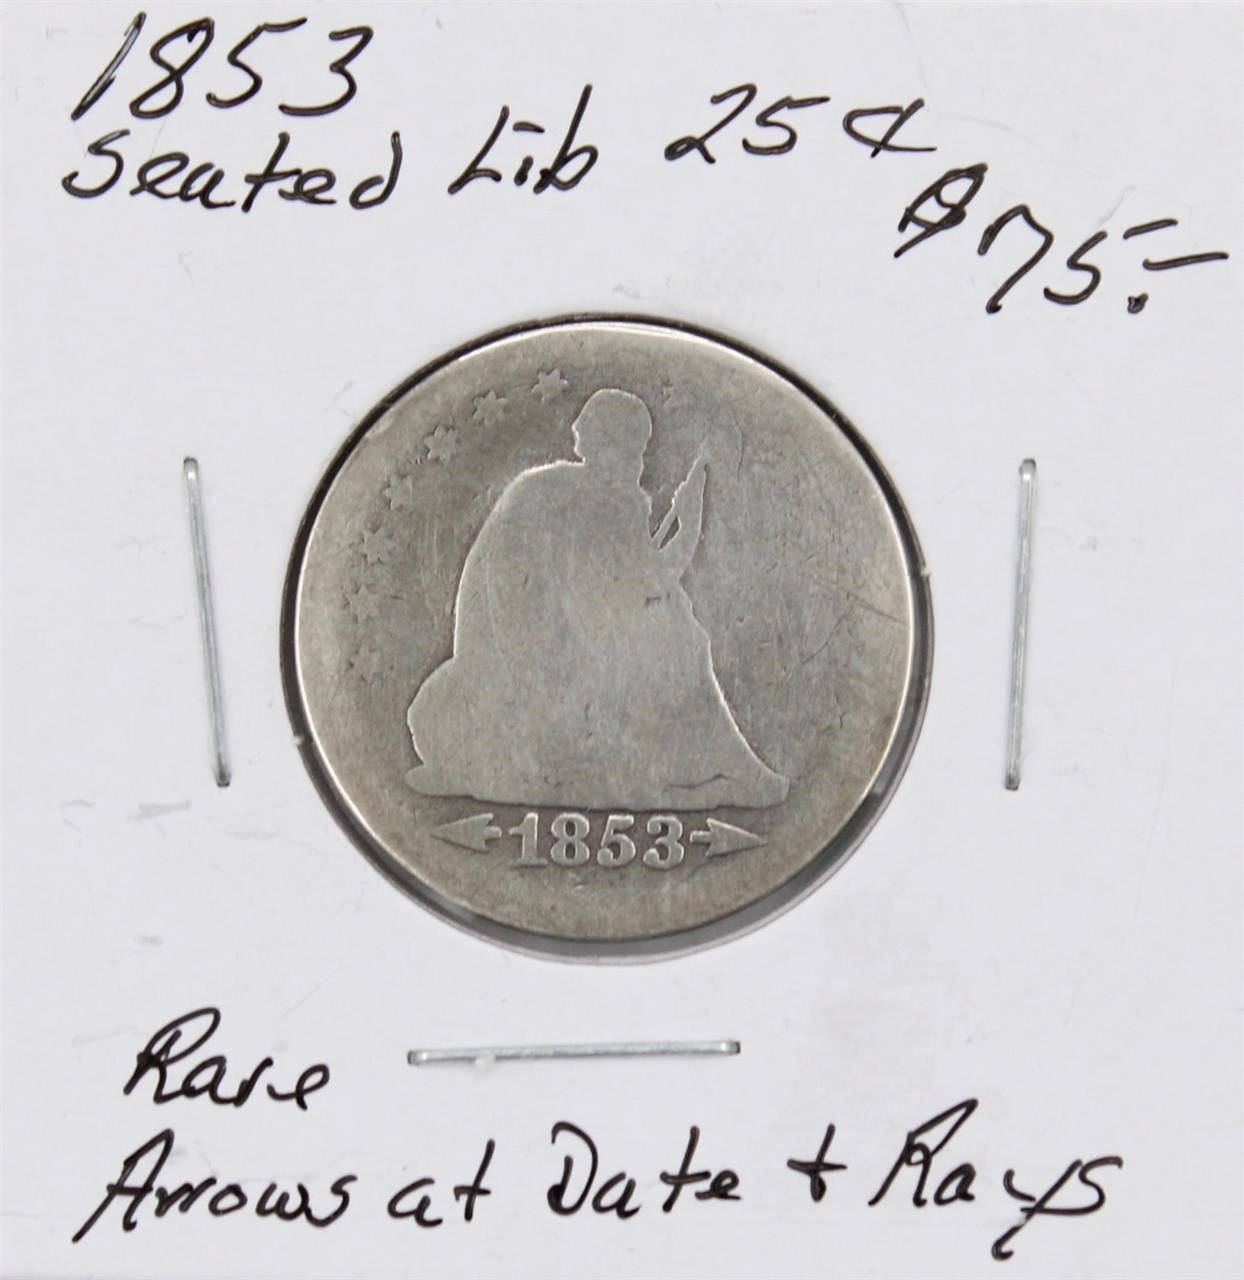 RARE 1853 Seated Lib Quarter Arrow at Date & Rays